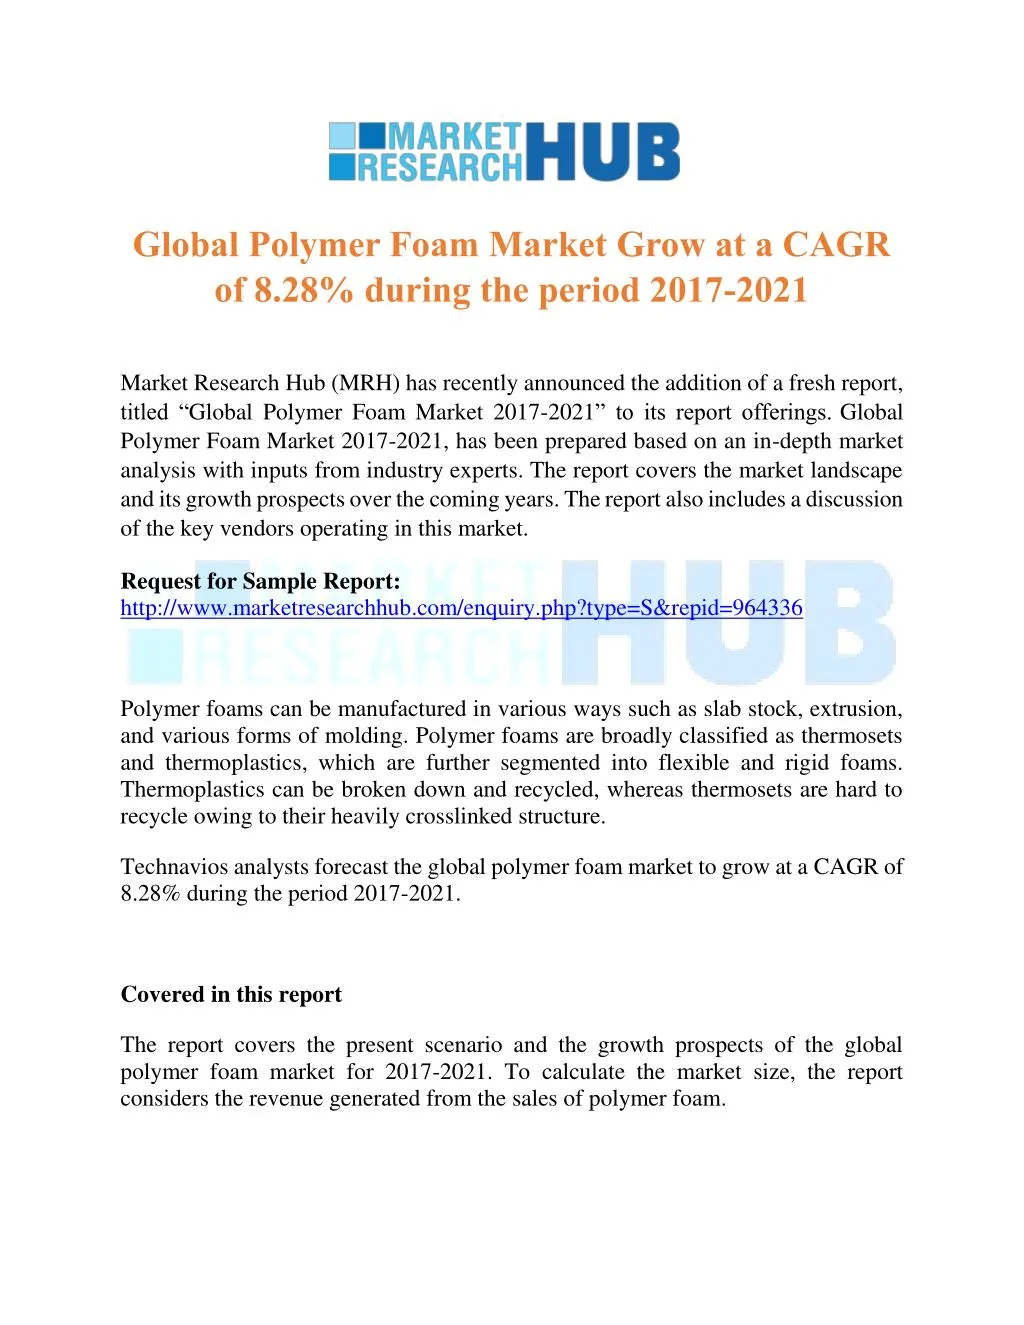 global polymer foam market grow at a cagr